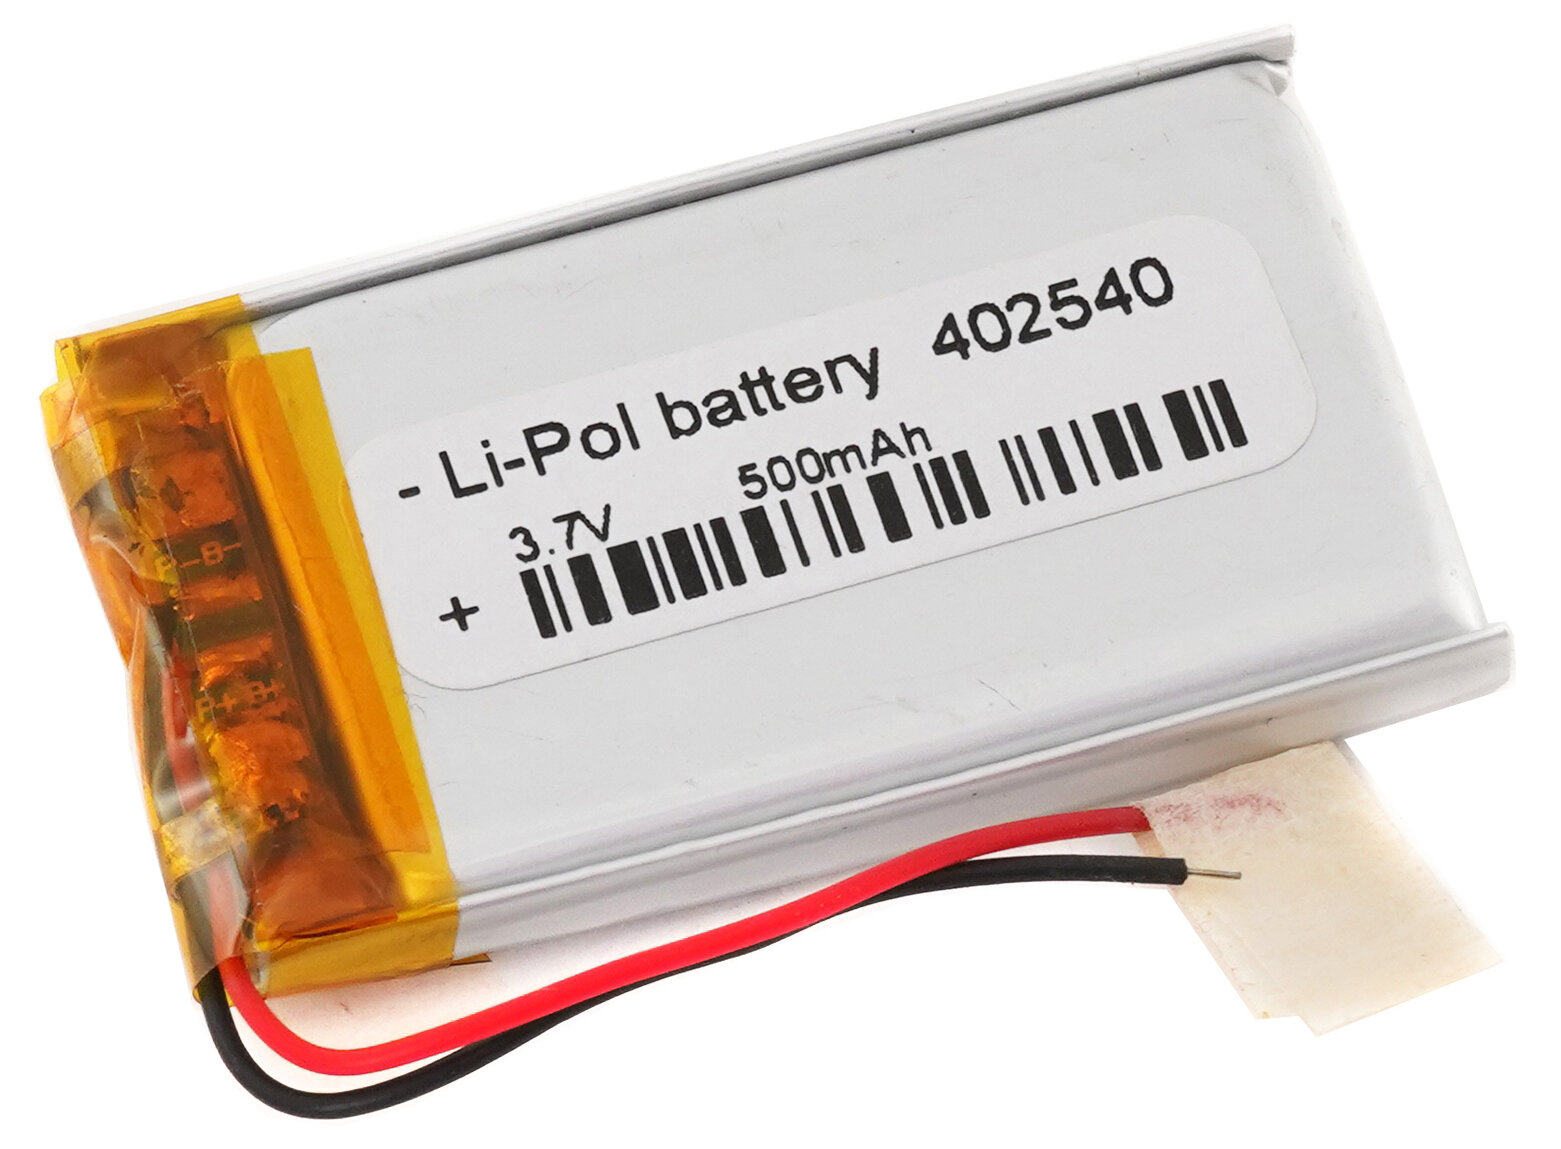 Аккумулятор Li-Pol (батарея) 4x25x40mm 2pin 3.7V/500mAh